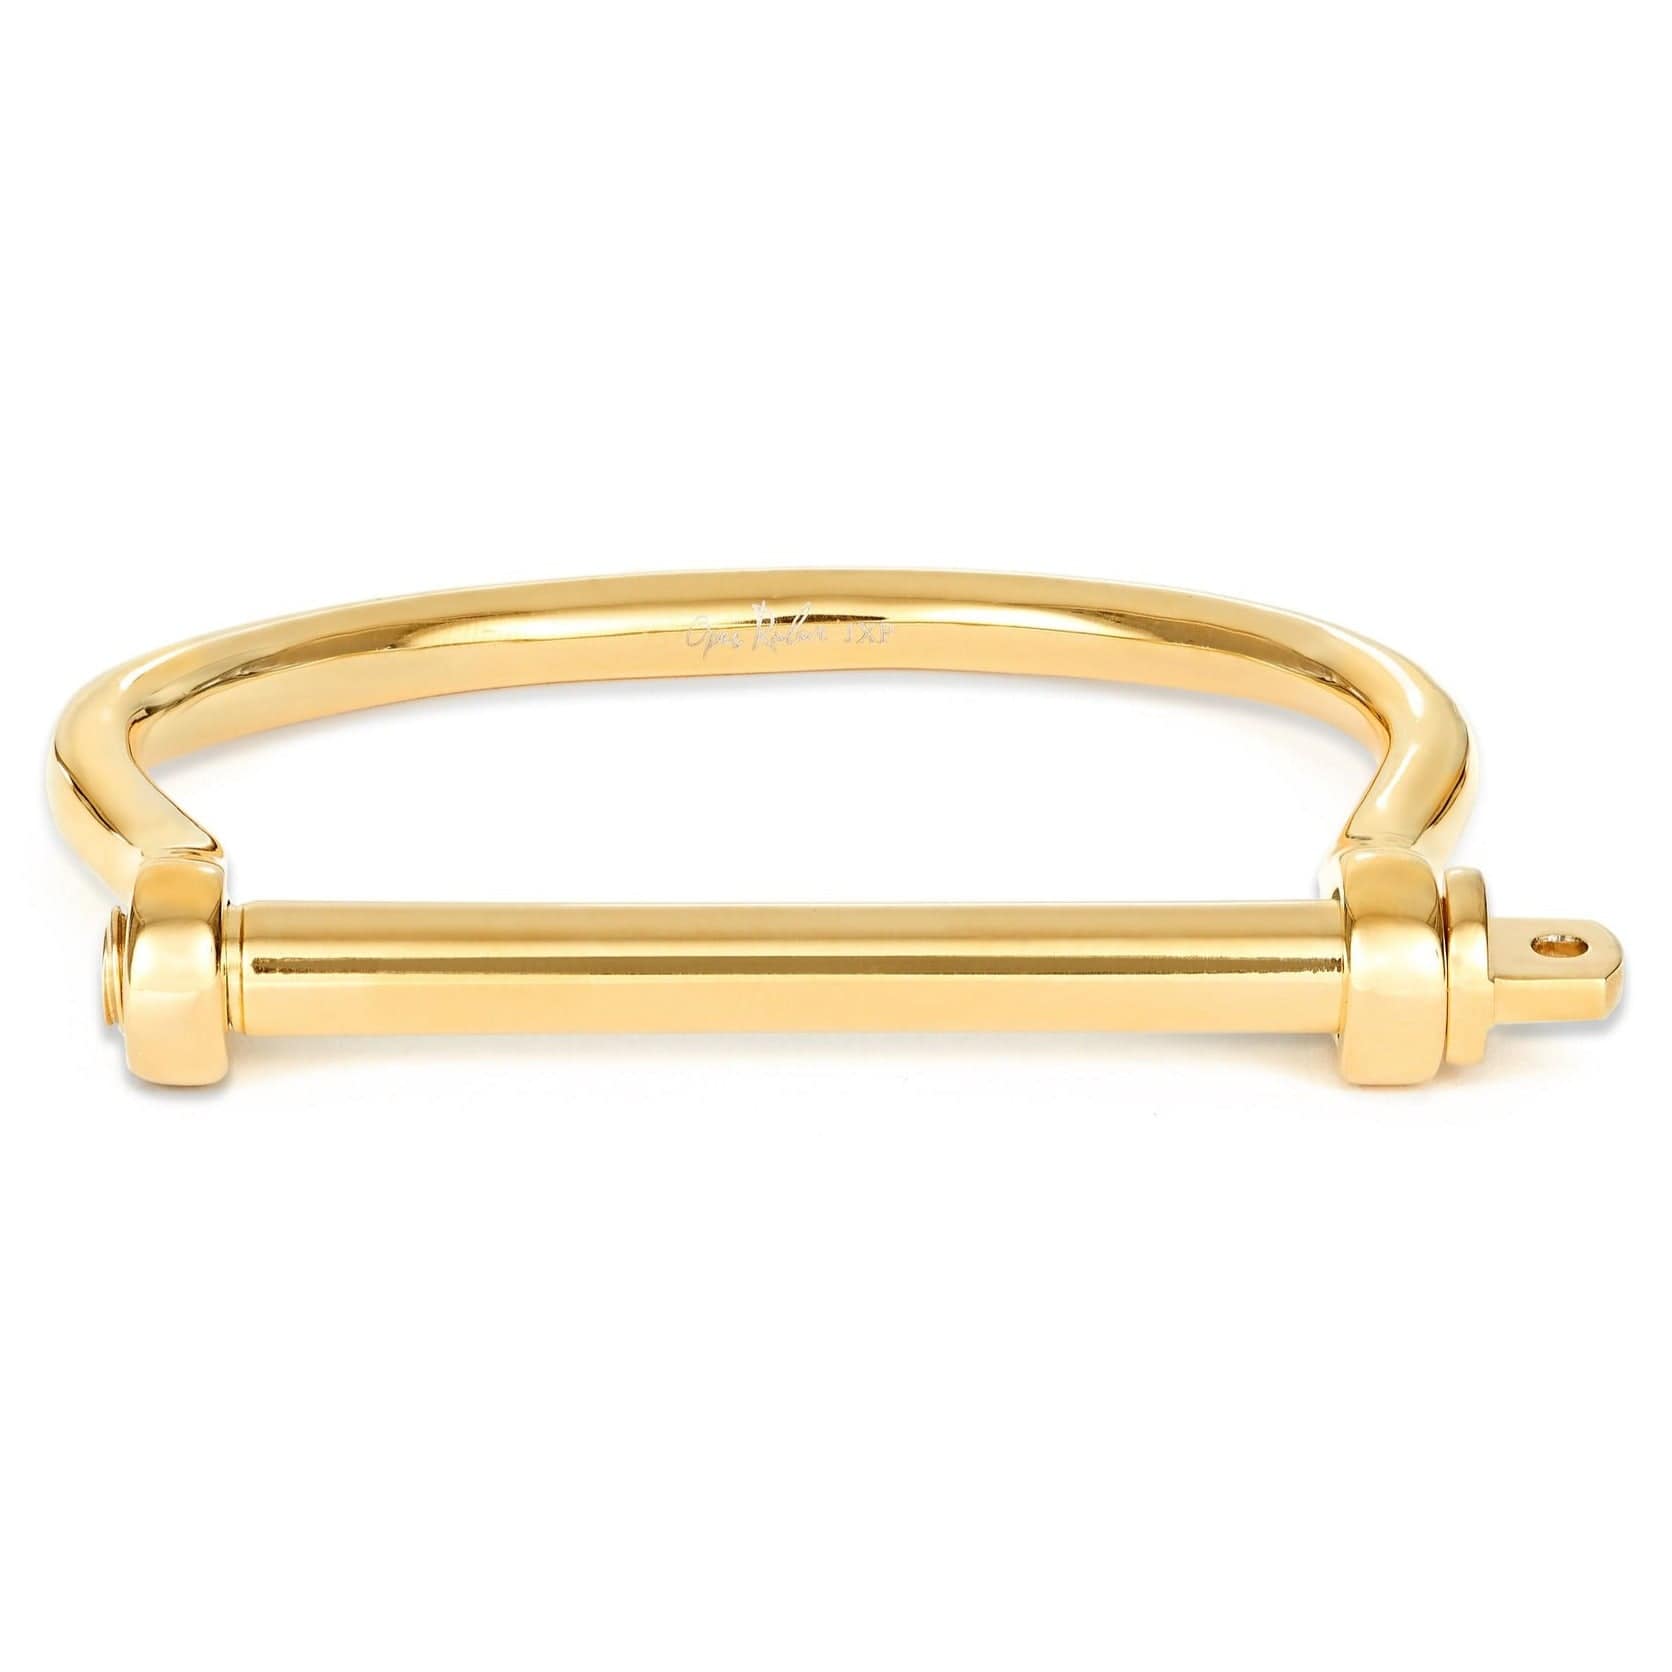 Opes Robur bracelet GOLD XL SCREW CUFF BRACELET